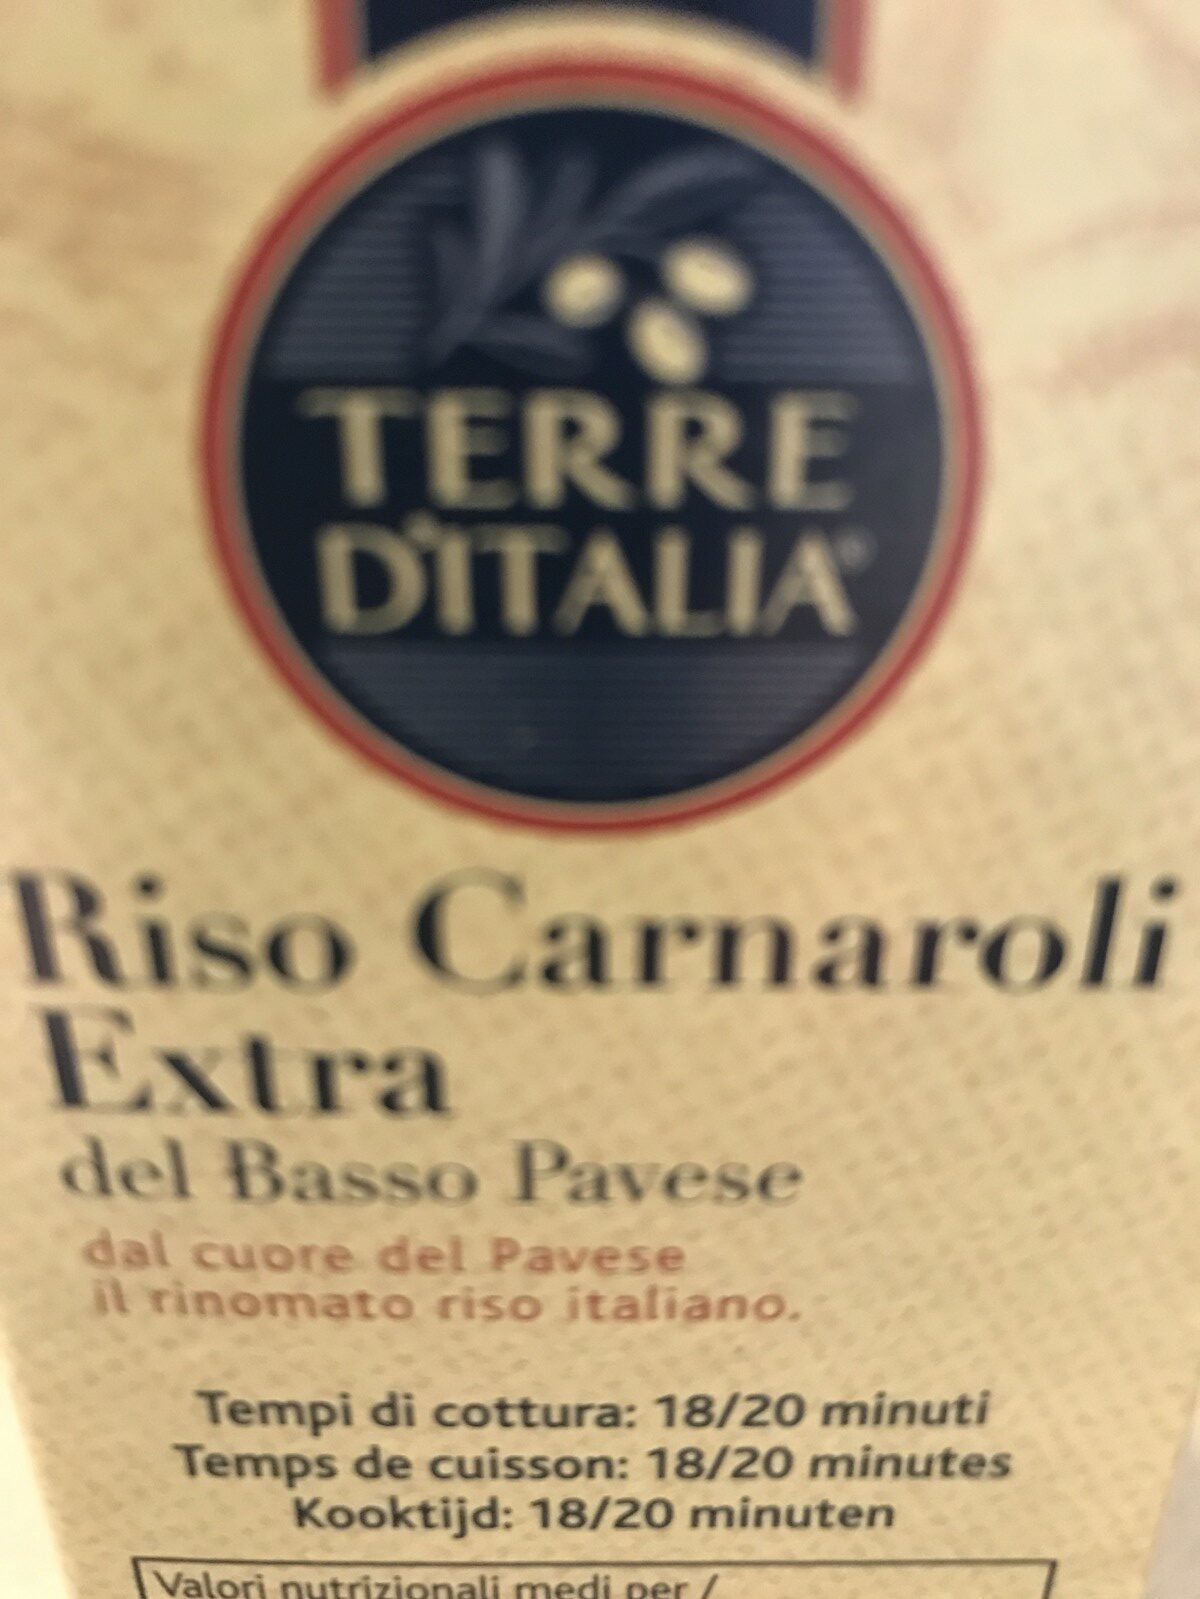 Riso Carnaroli Extra Terre D'italia 1000 - Ingredients - fr